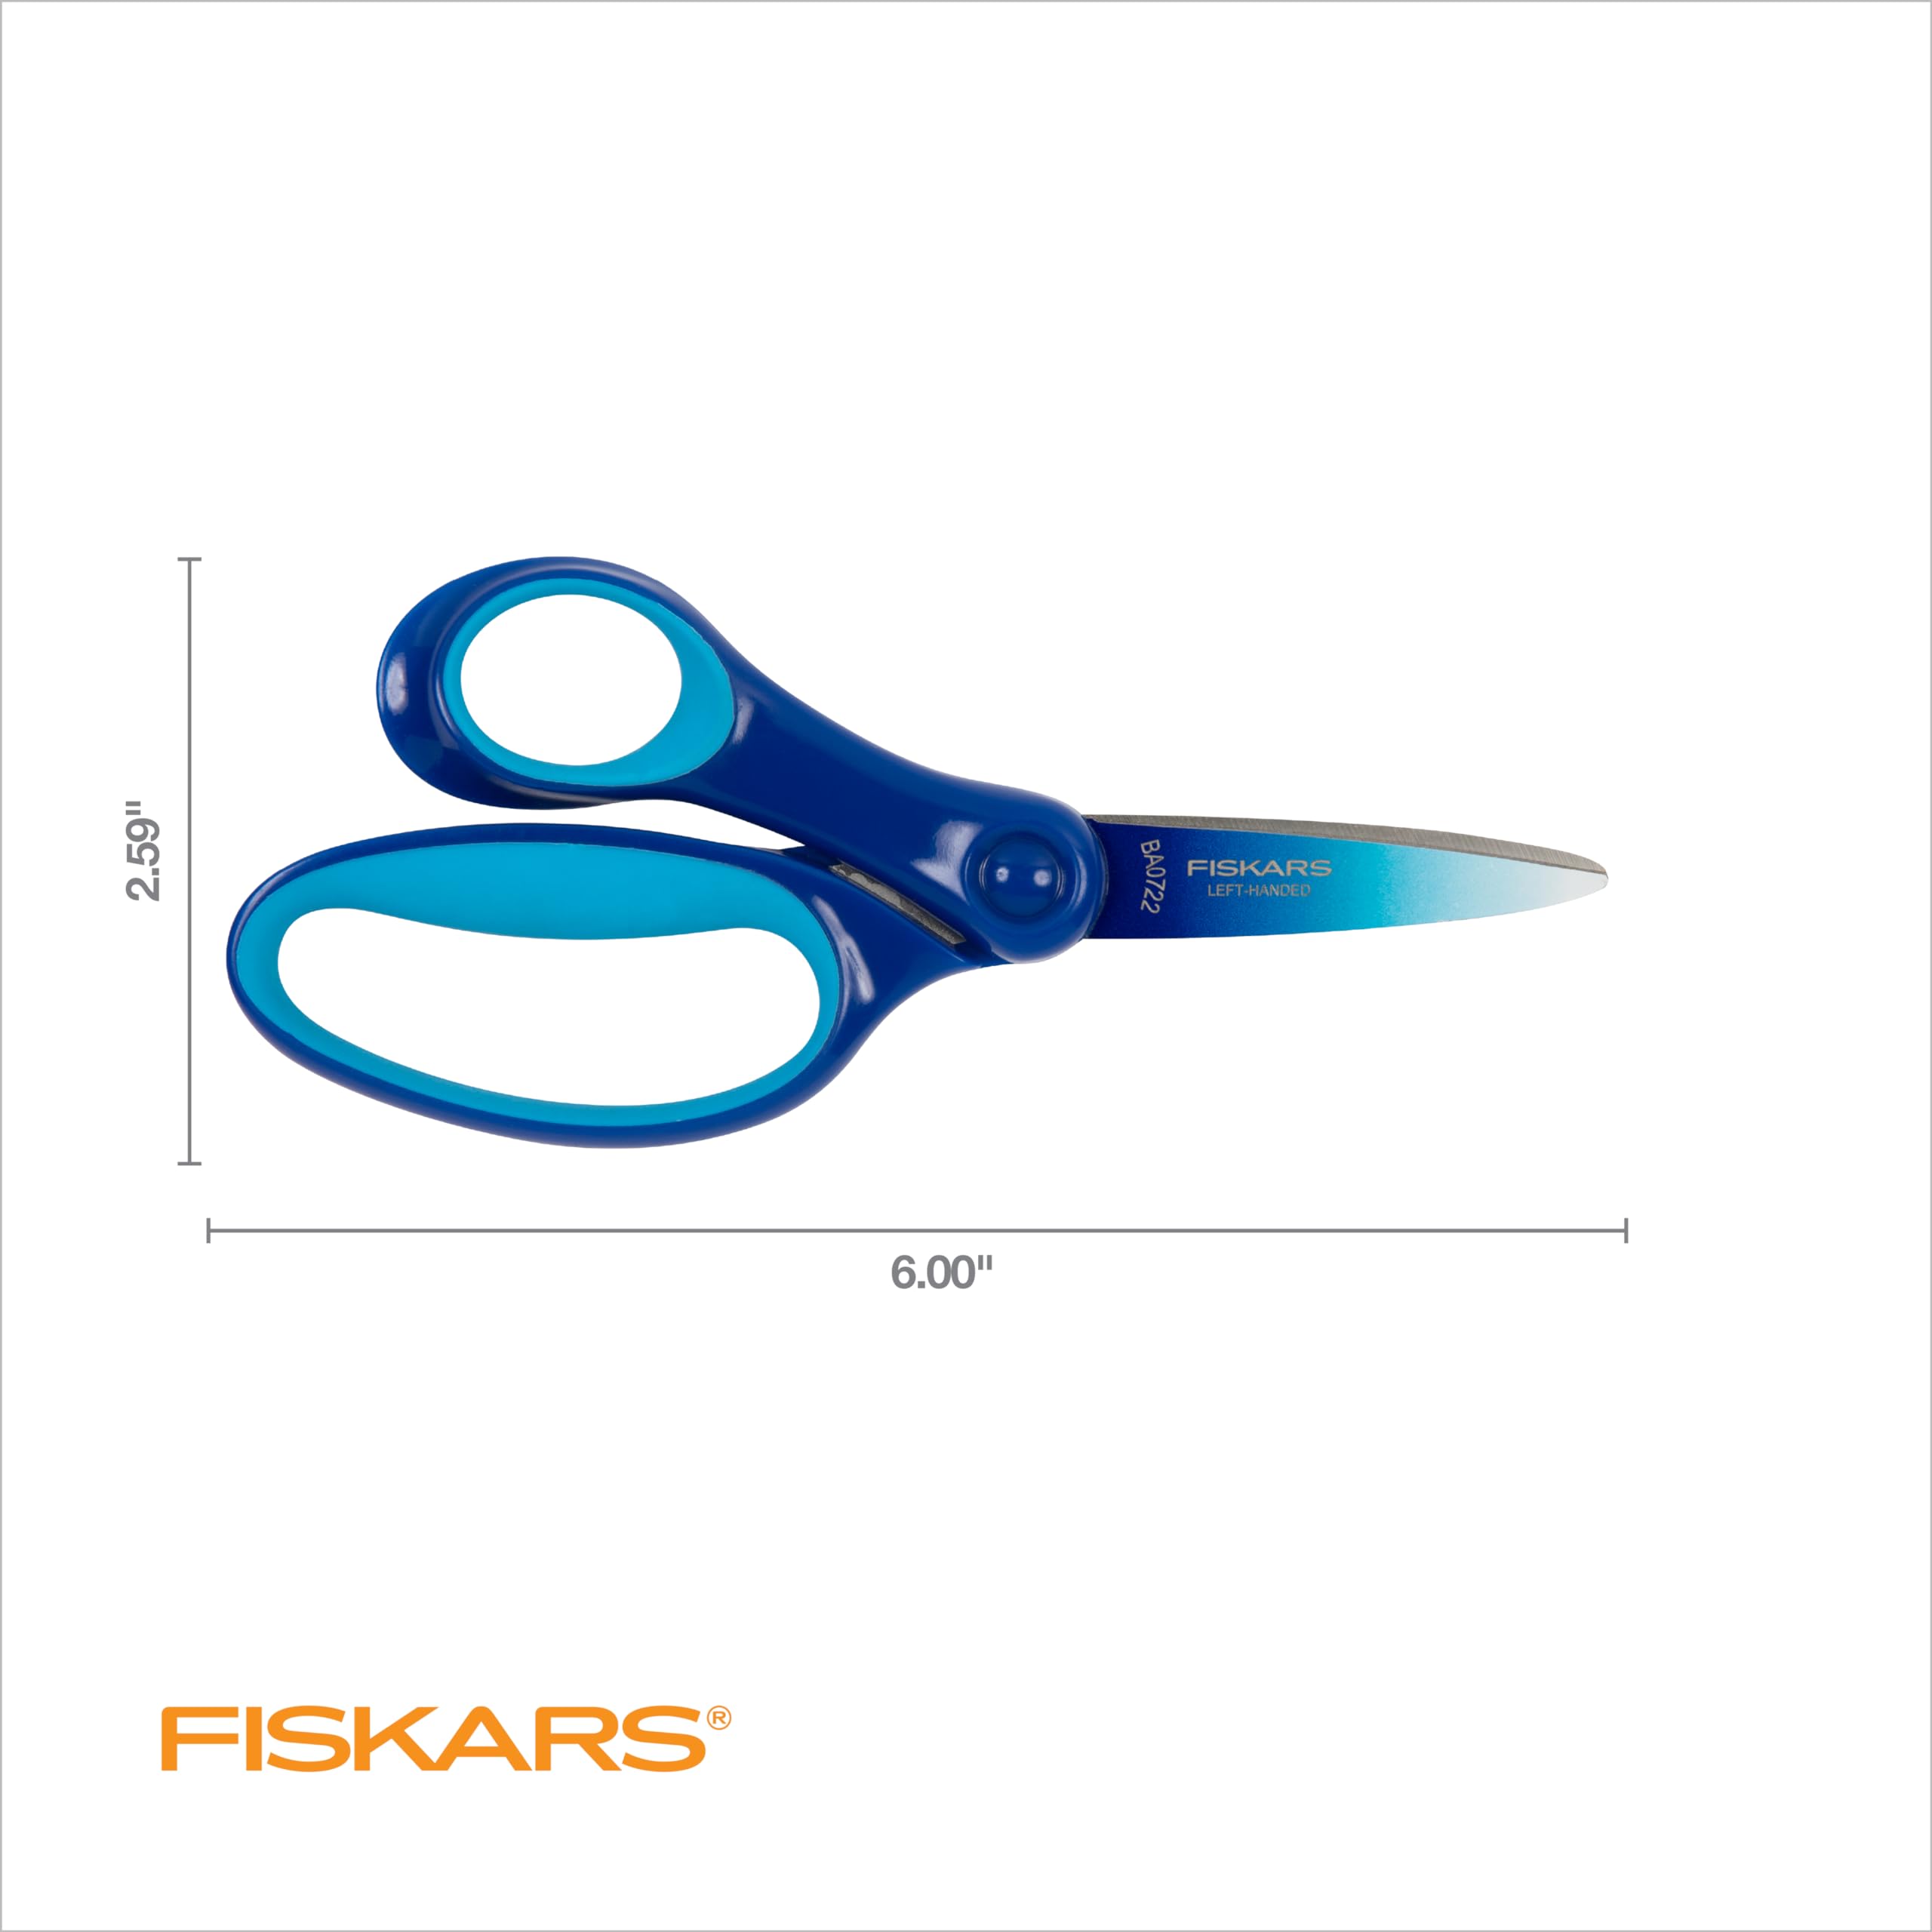 Fiskars® Big Kids Ombre Left-handed Scissors, Blue (6 in.)